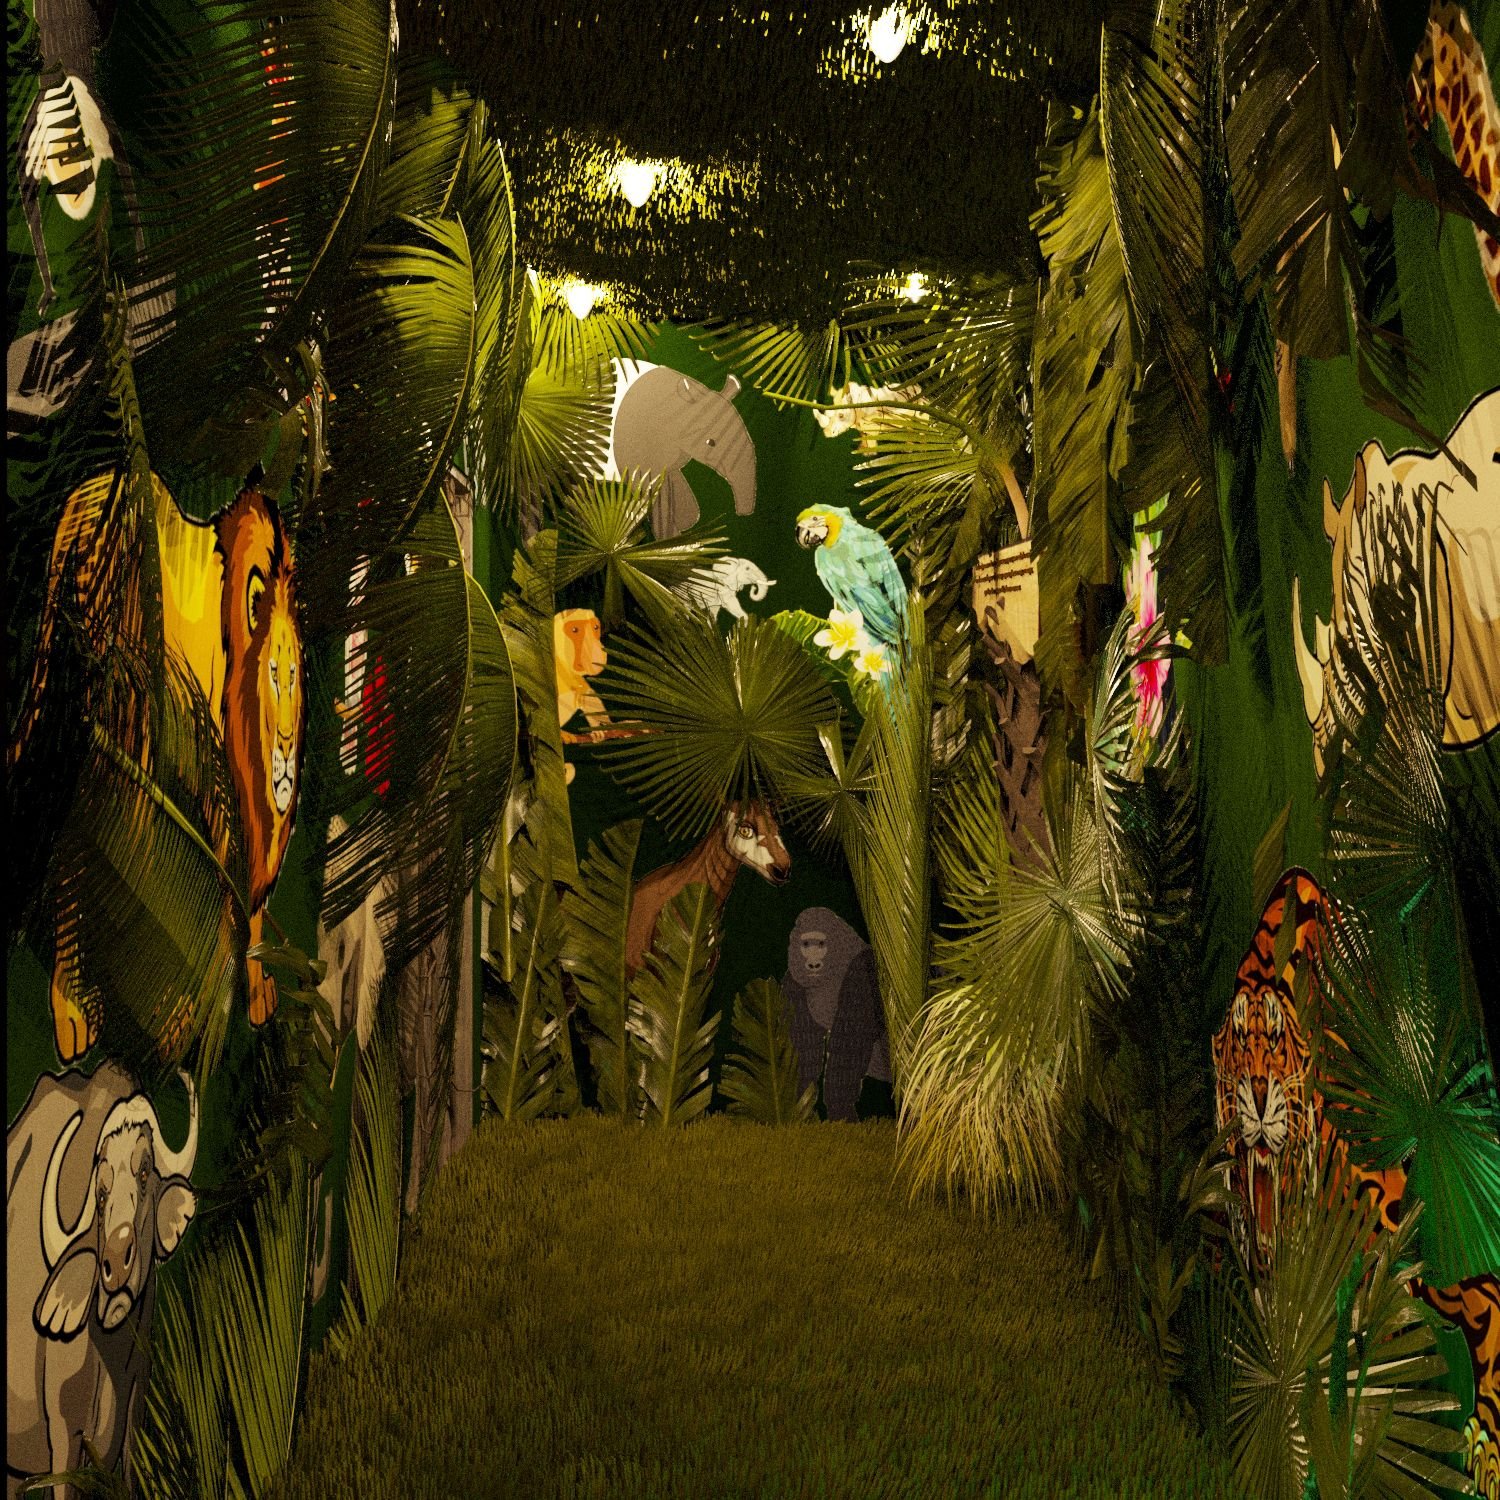 Джуманджи комната. Декорации джунгли. Вечеринка в стиле джунгли. Декорации в стиле Джуманджи. Джуманджи растение.